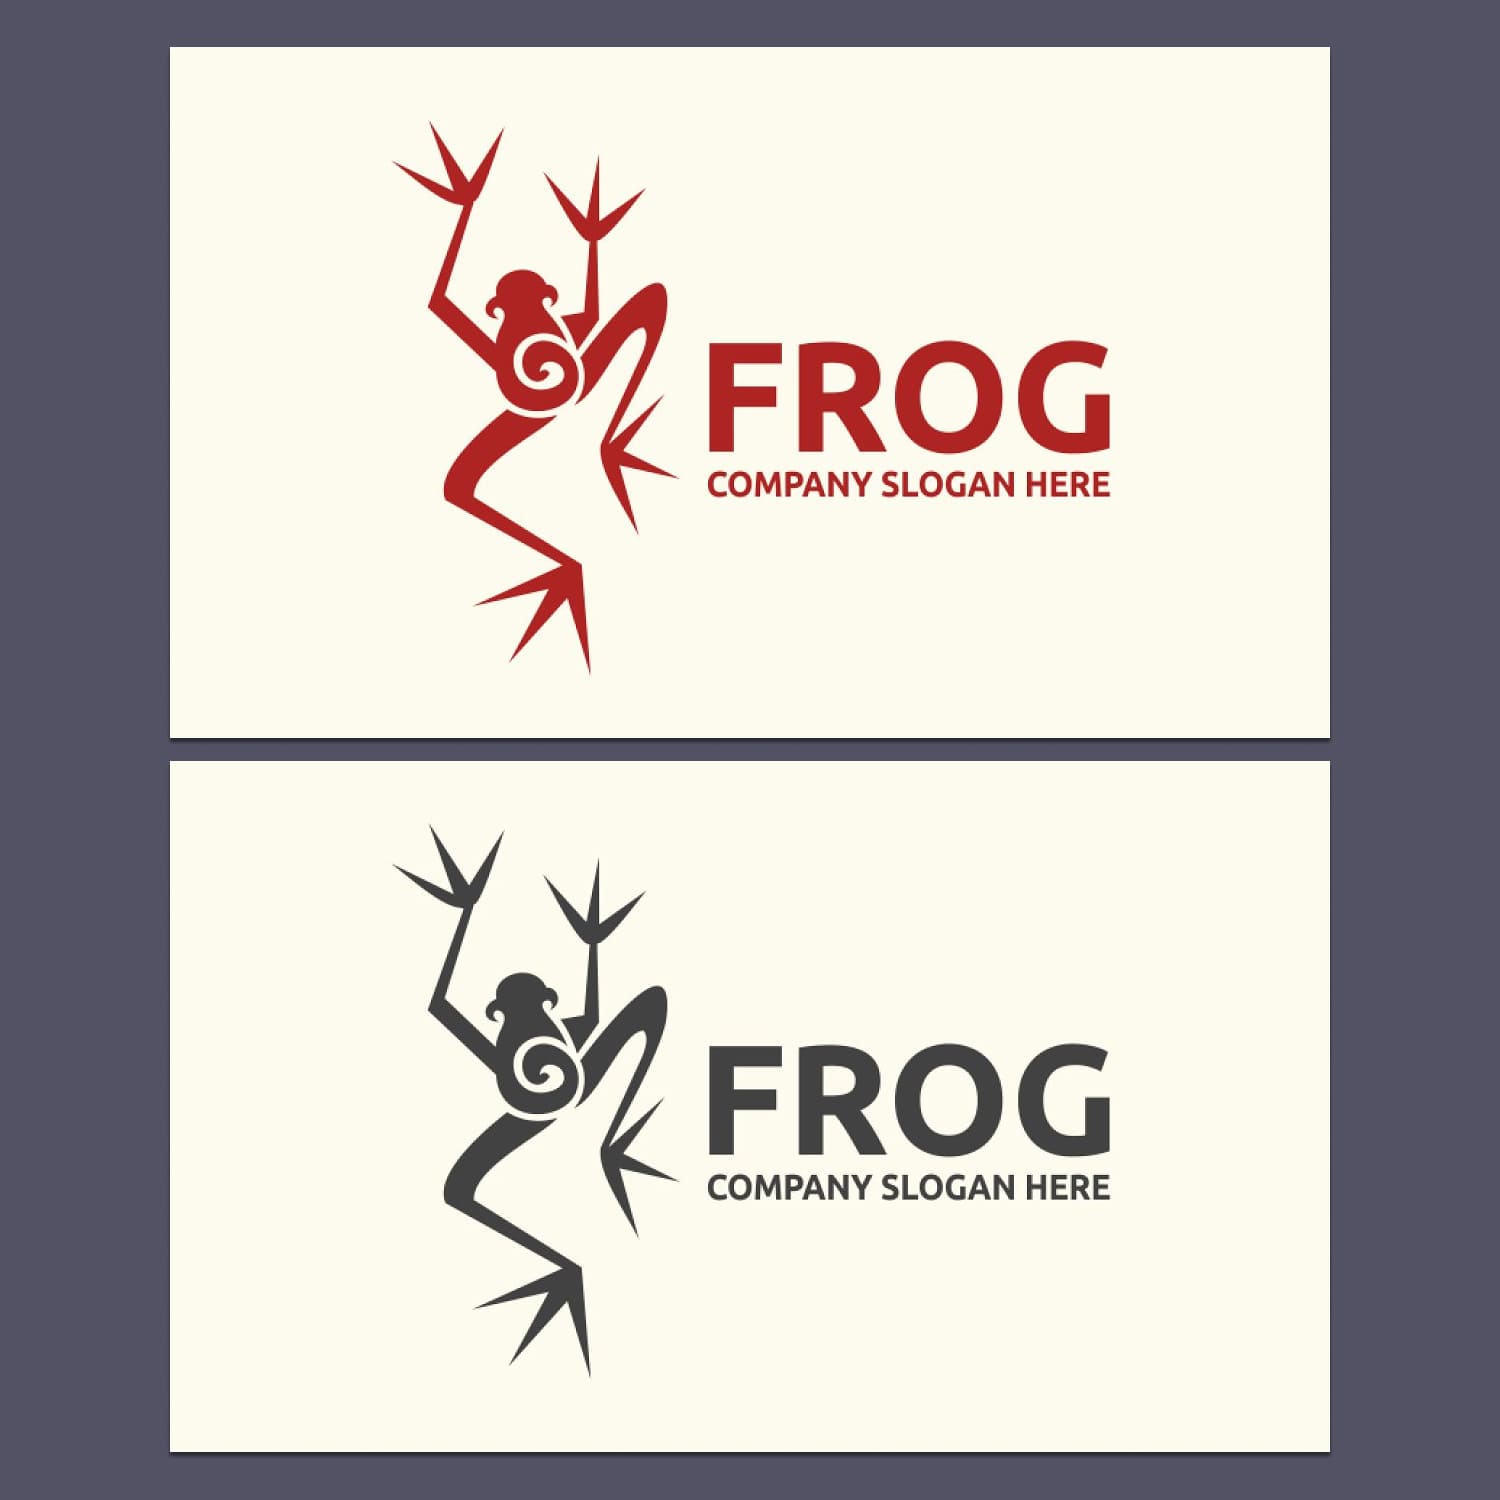 Frog created by Brandlogo.